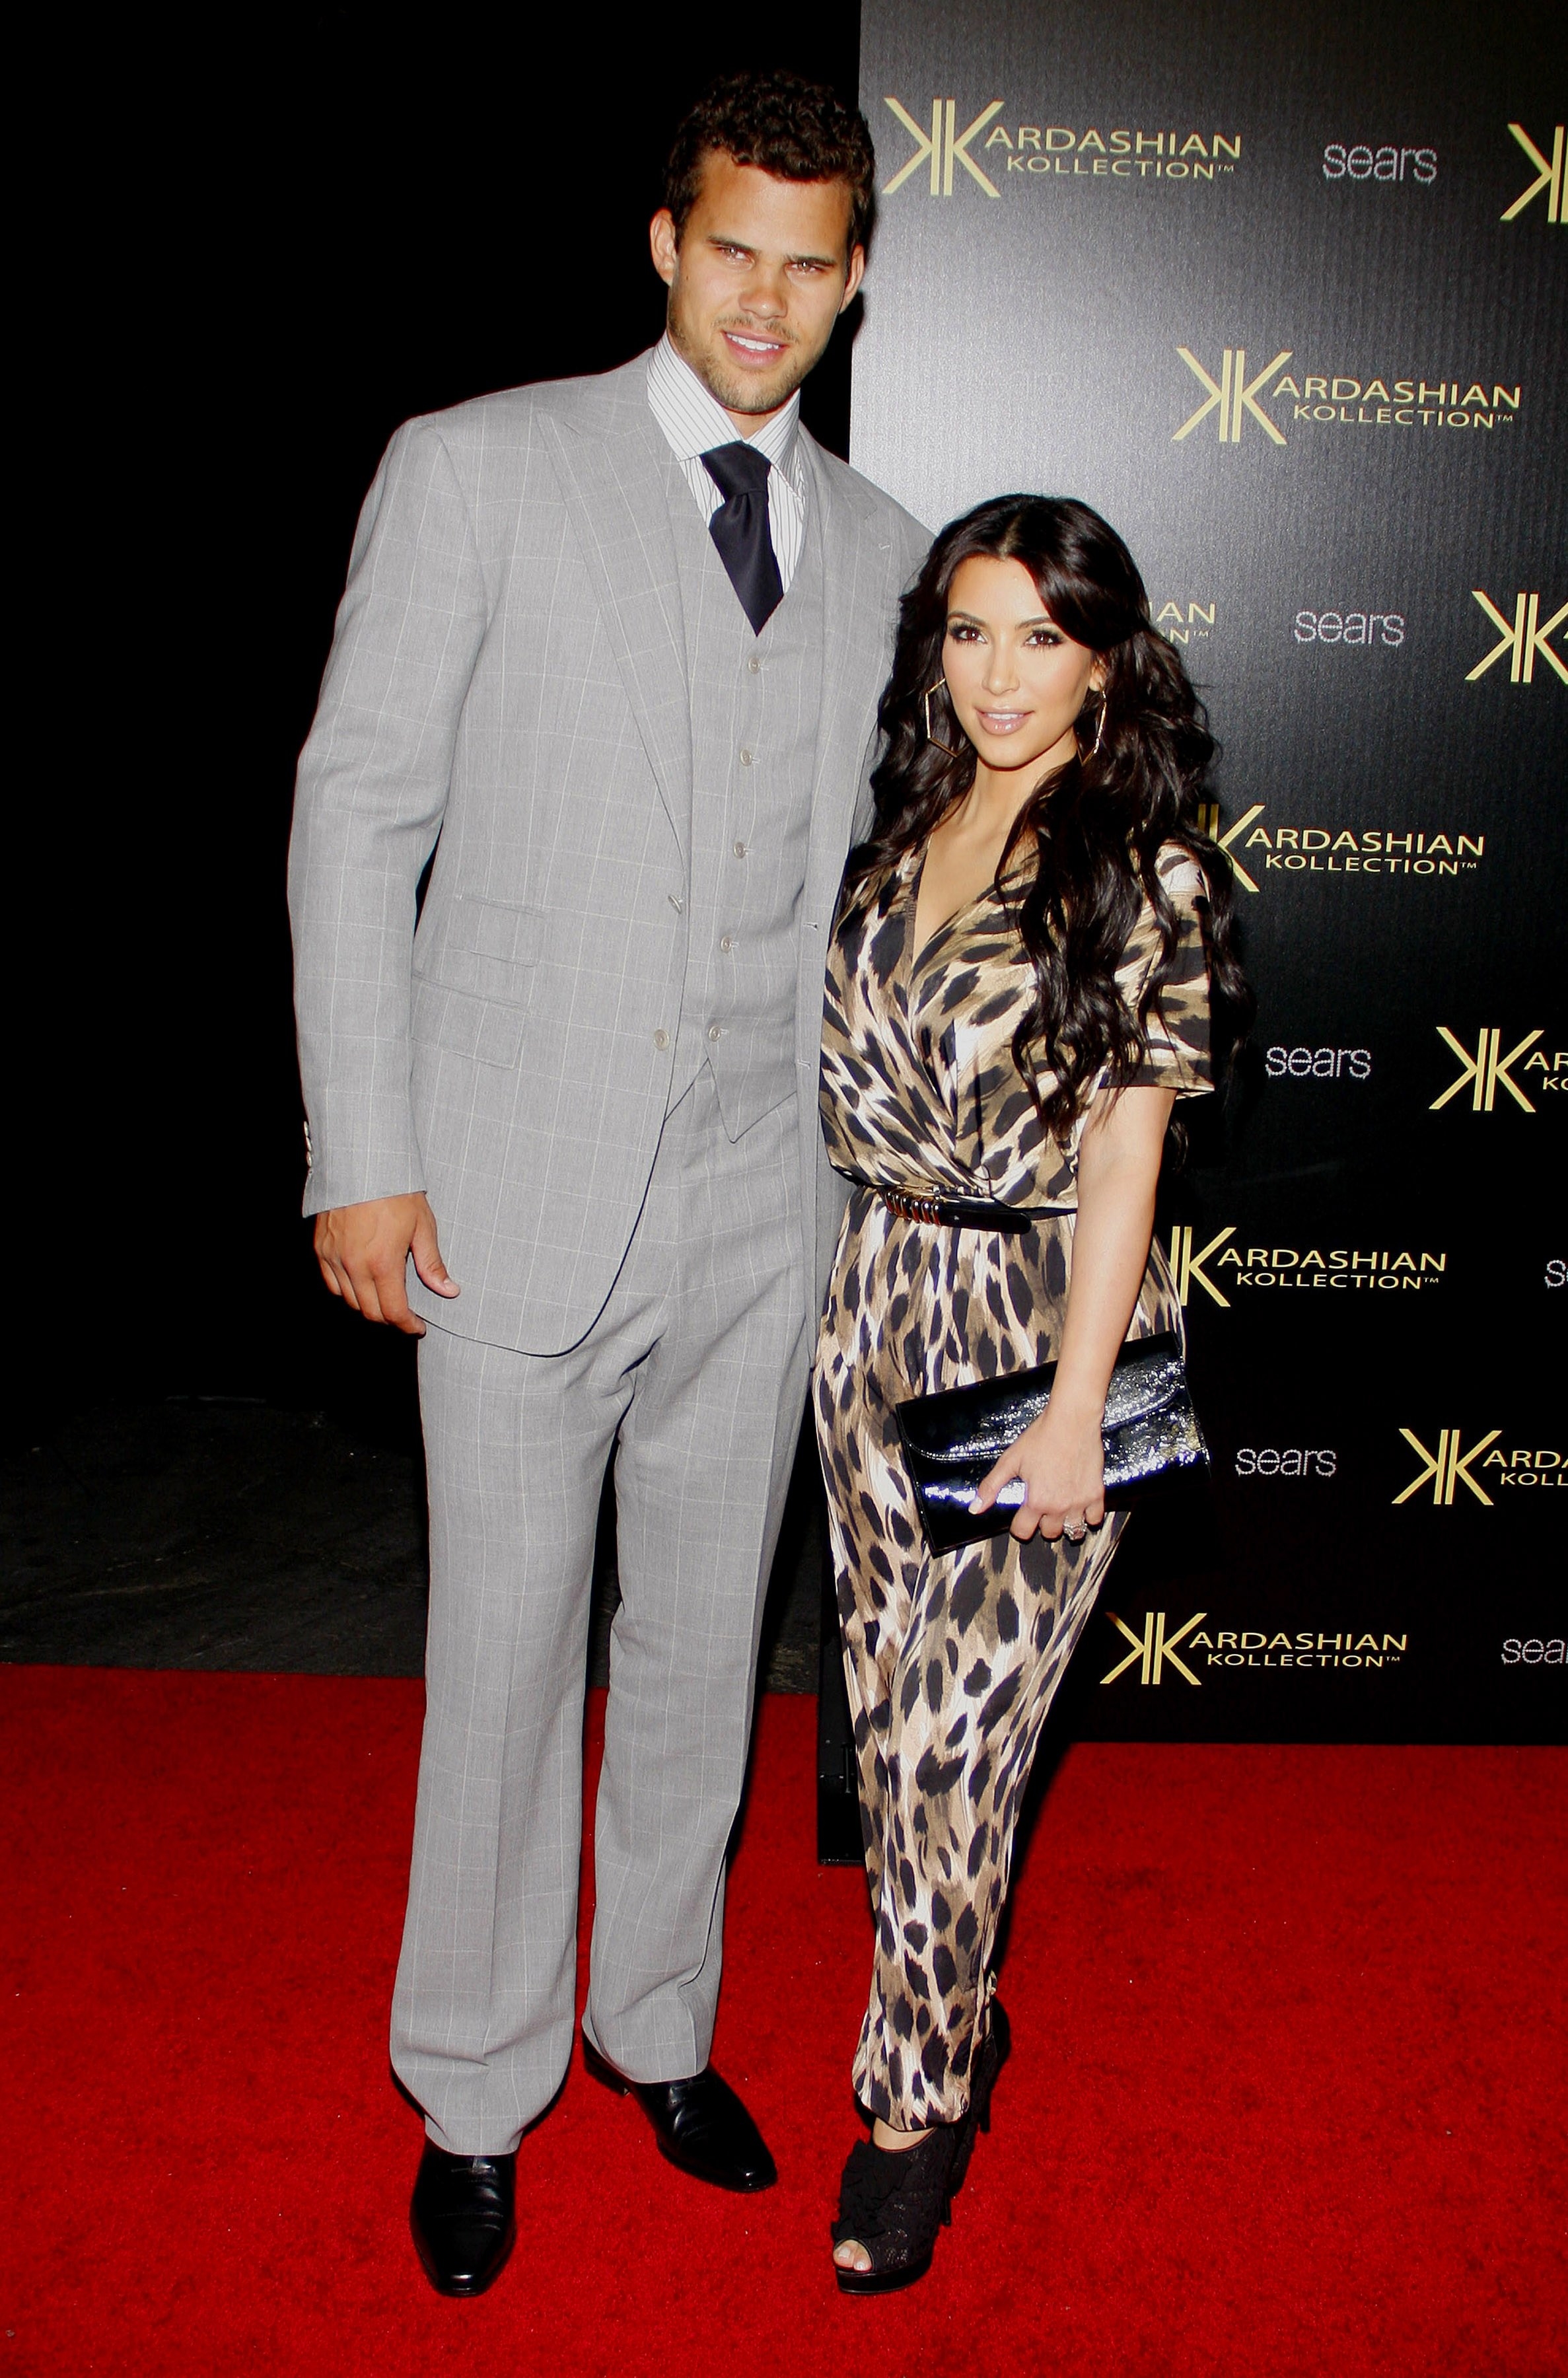 Kris Humphries and Kim Kardashian posing at an event